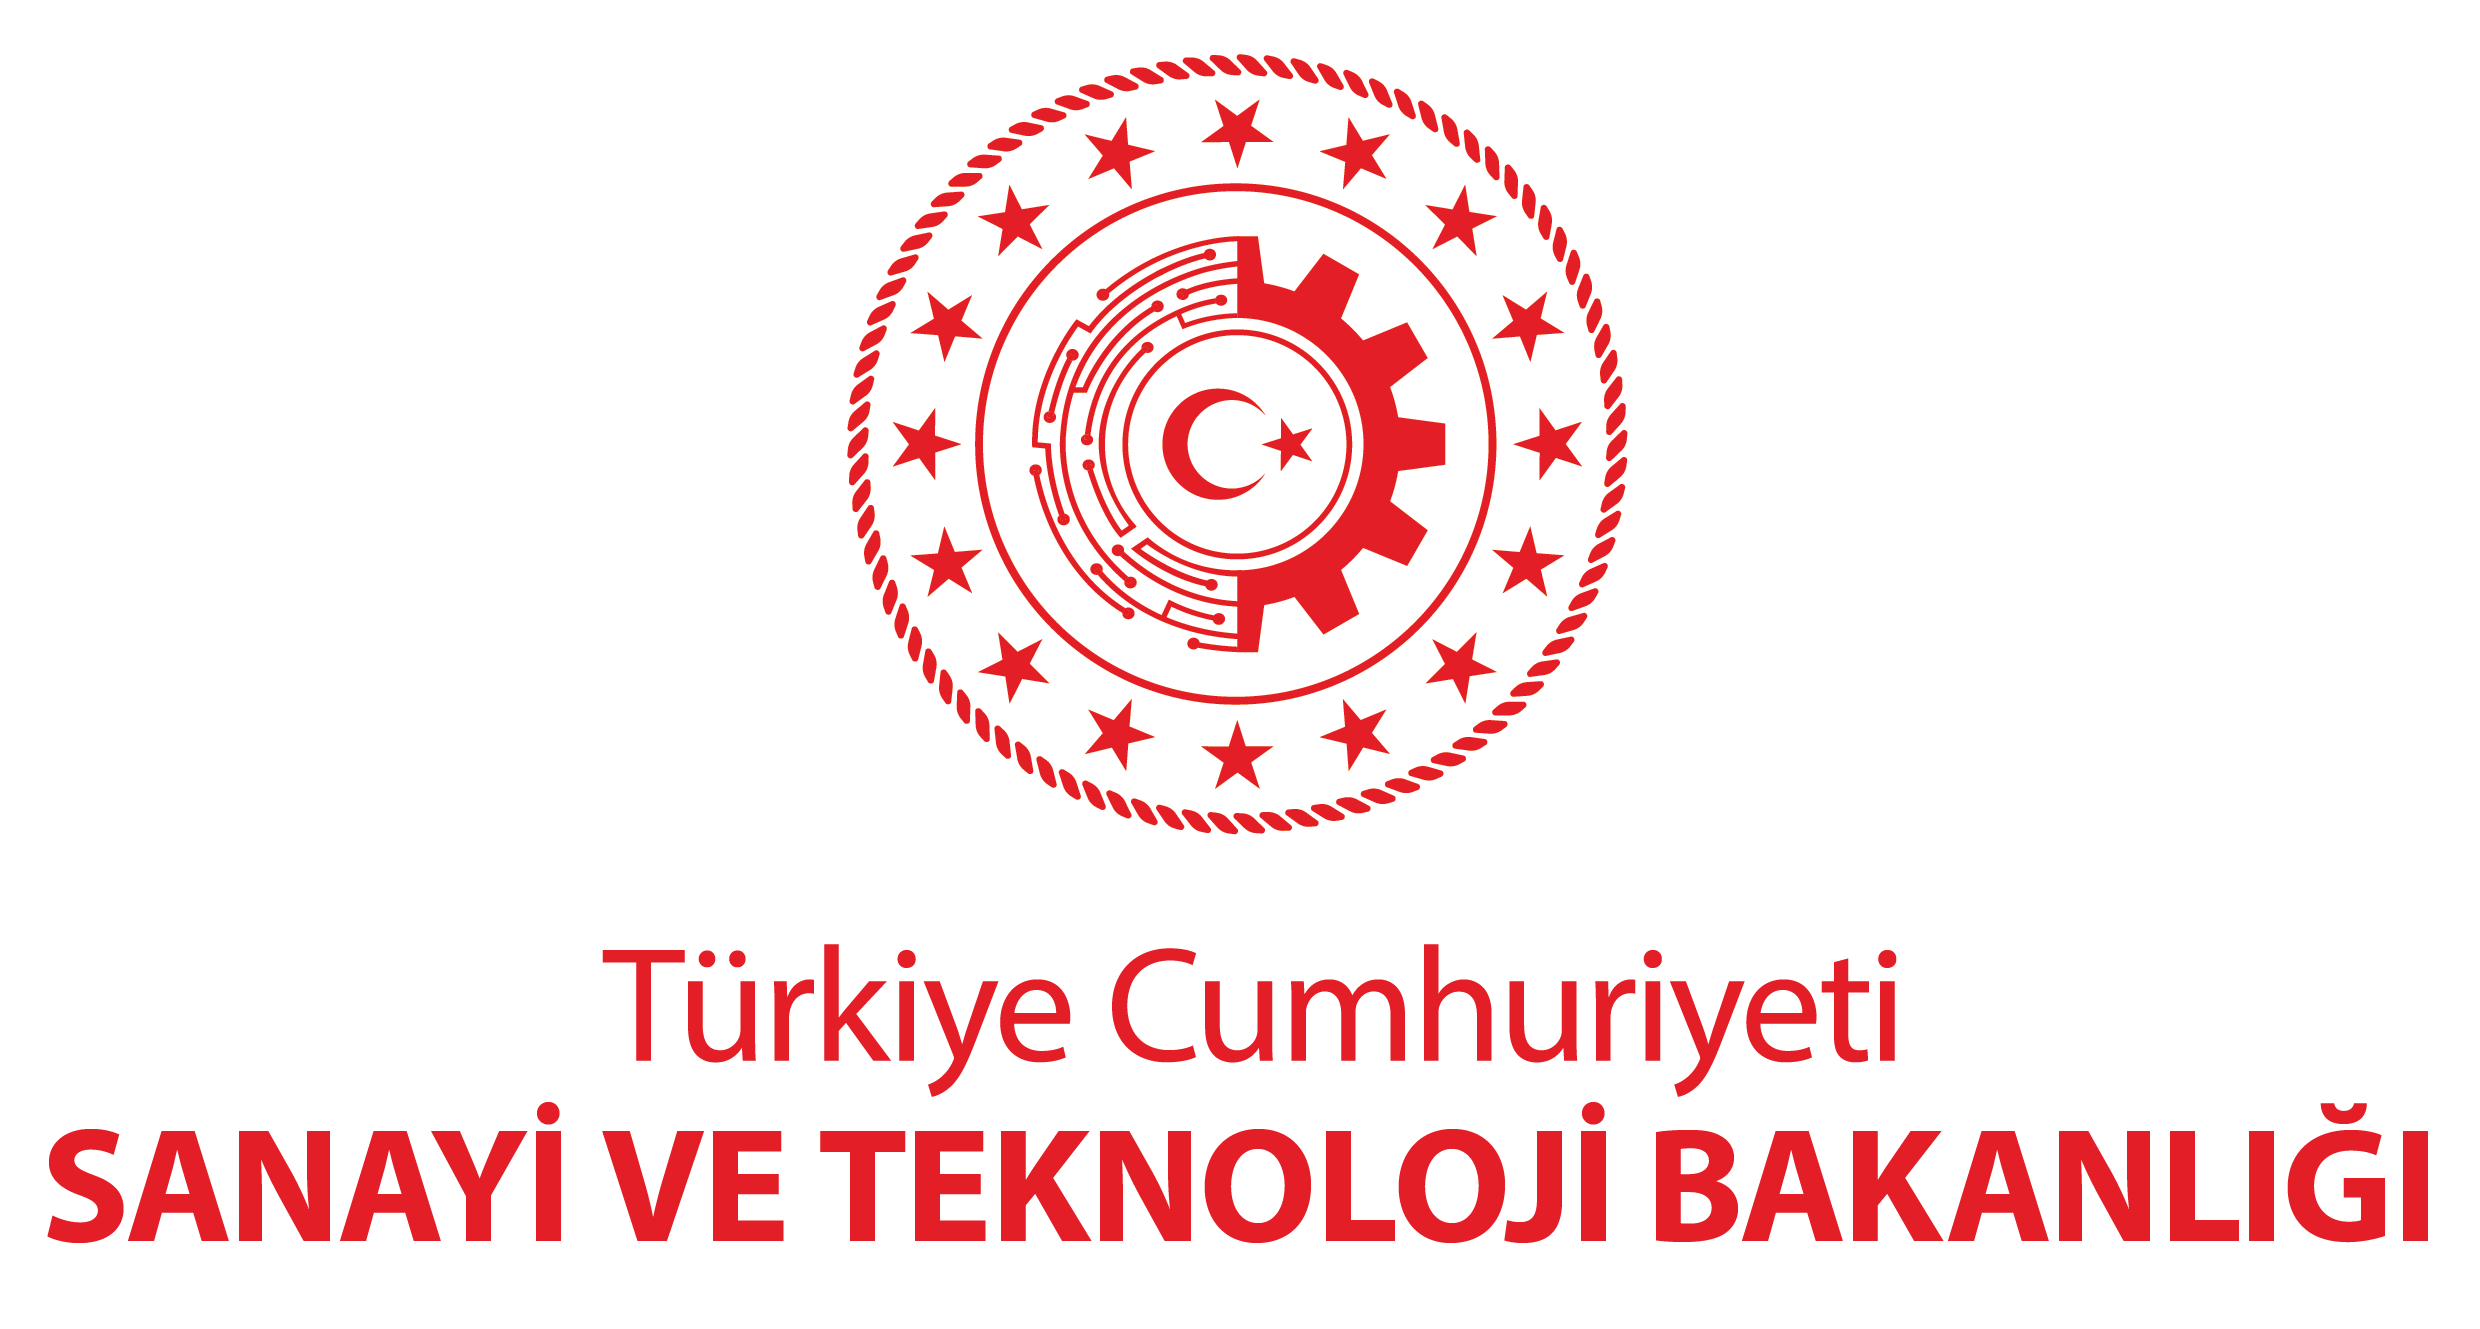 Republic of Türkiye Ministry of Foreign Affairs logo